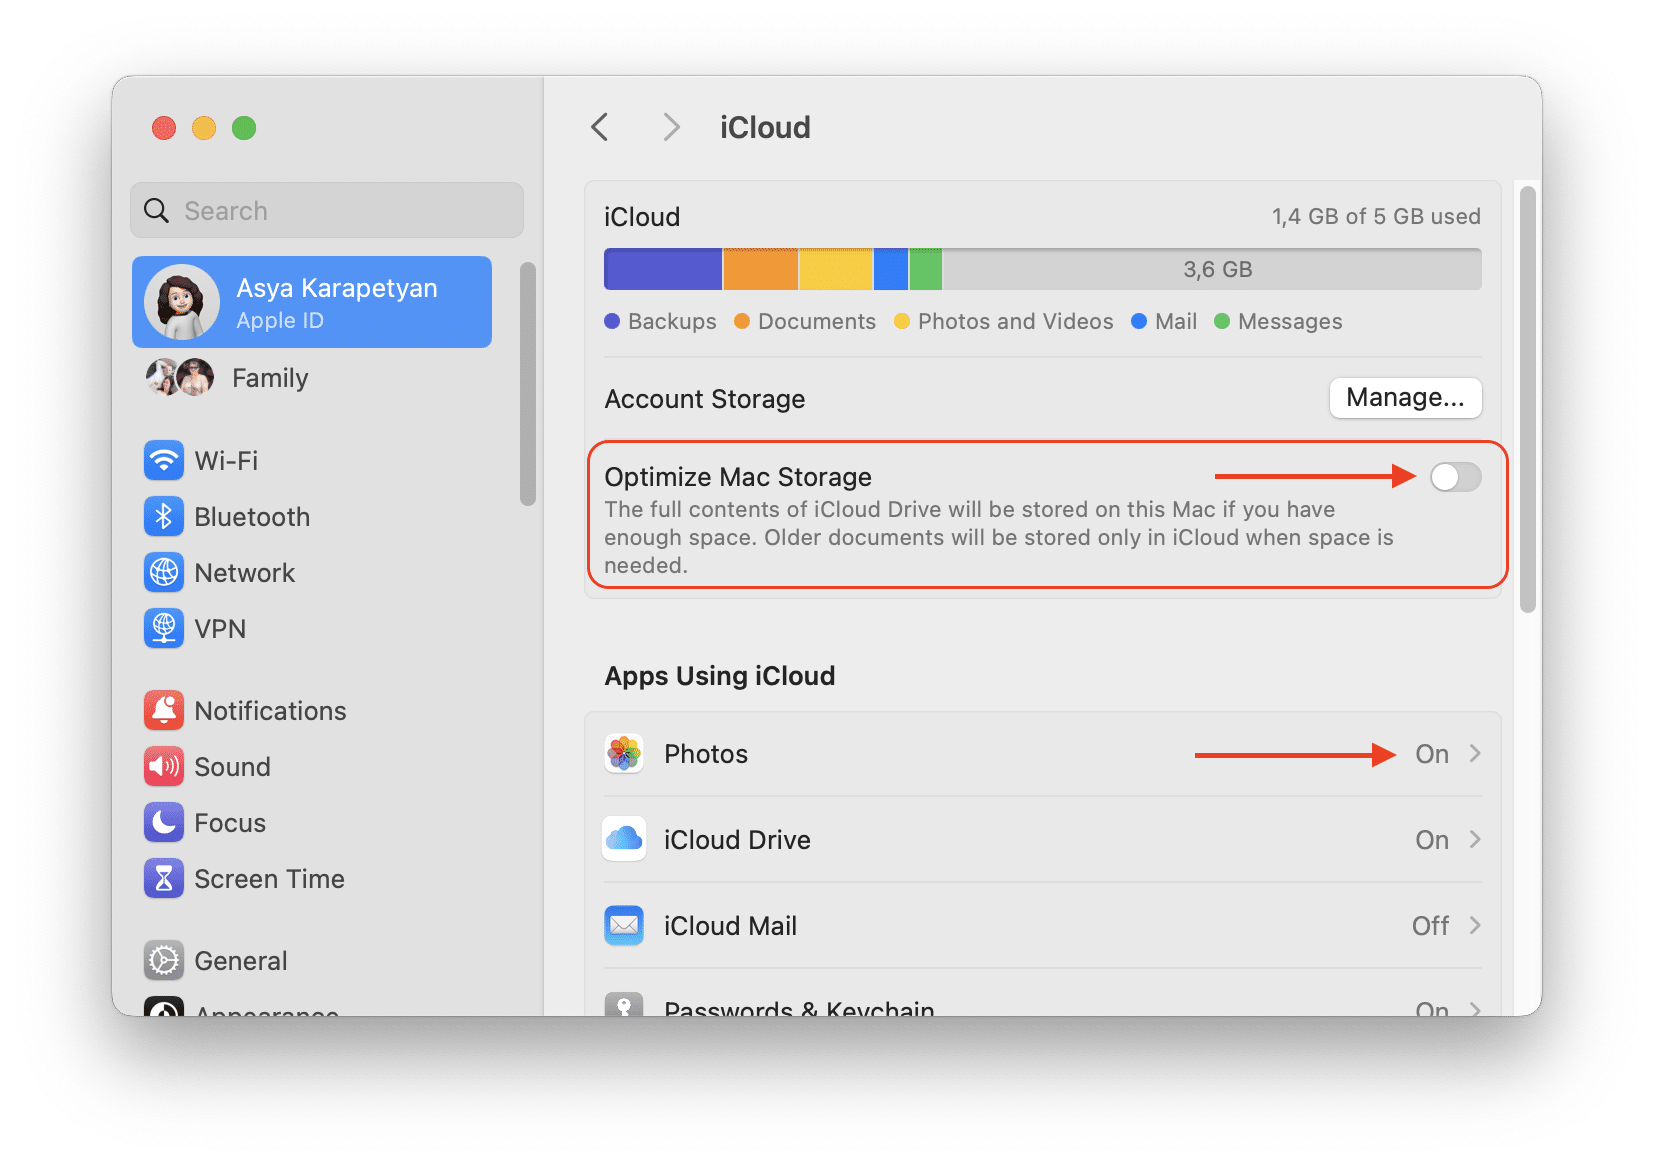 System Settings window showing iCloud settings